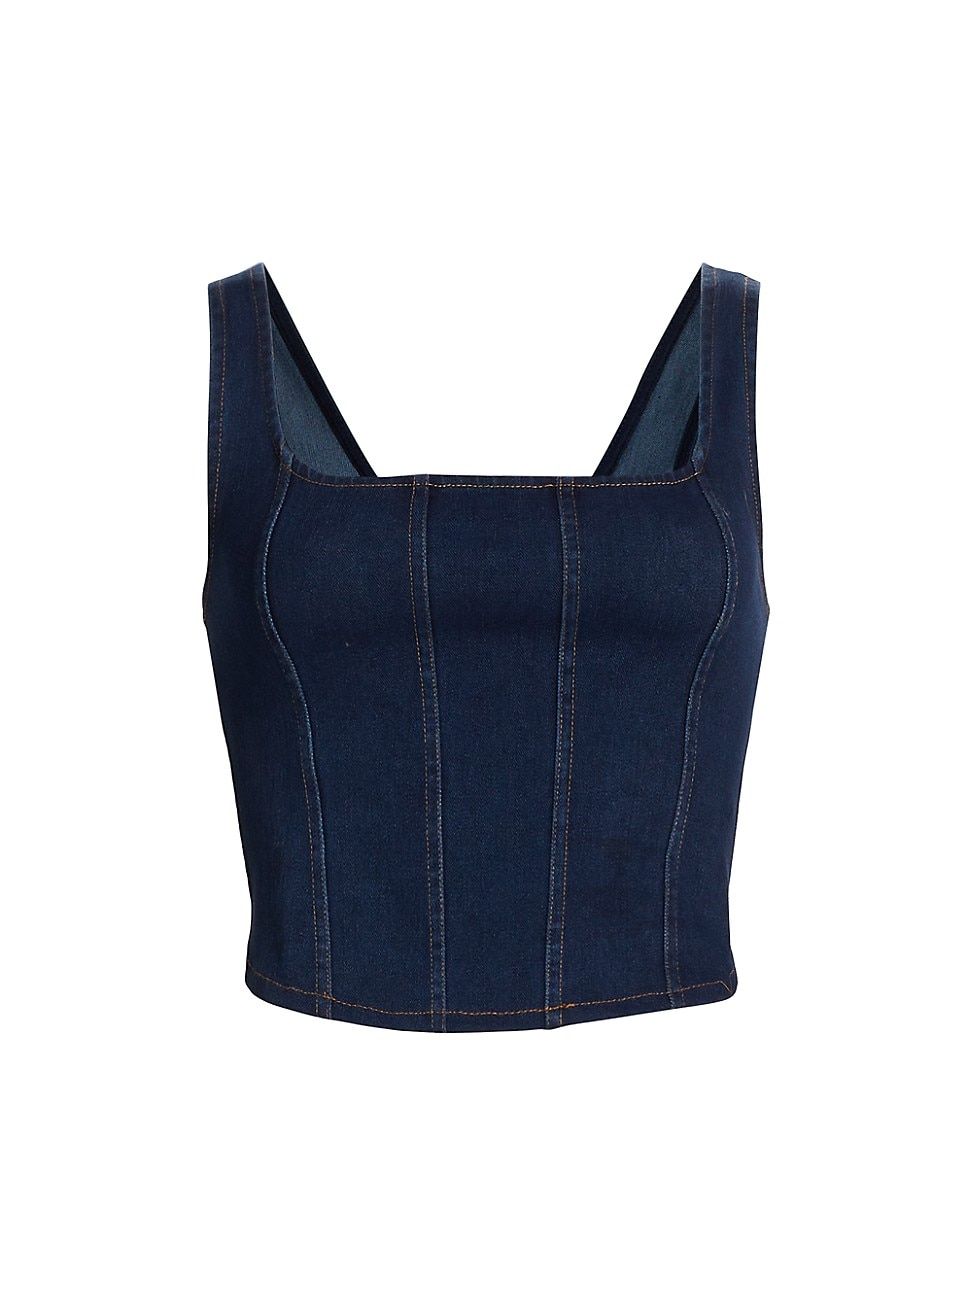 Women's Denim Corset Top - Indigo - Size Small | Saks Fifth Avenue